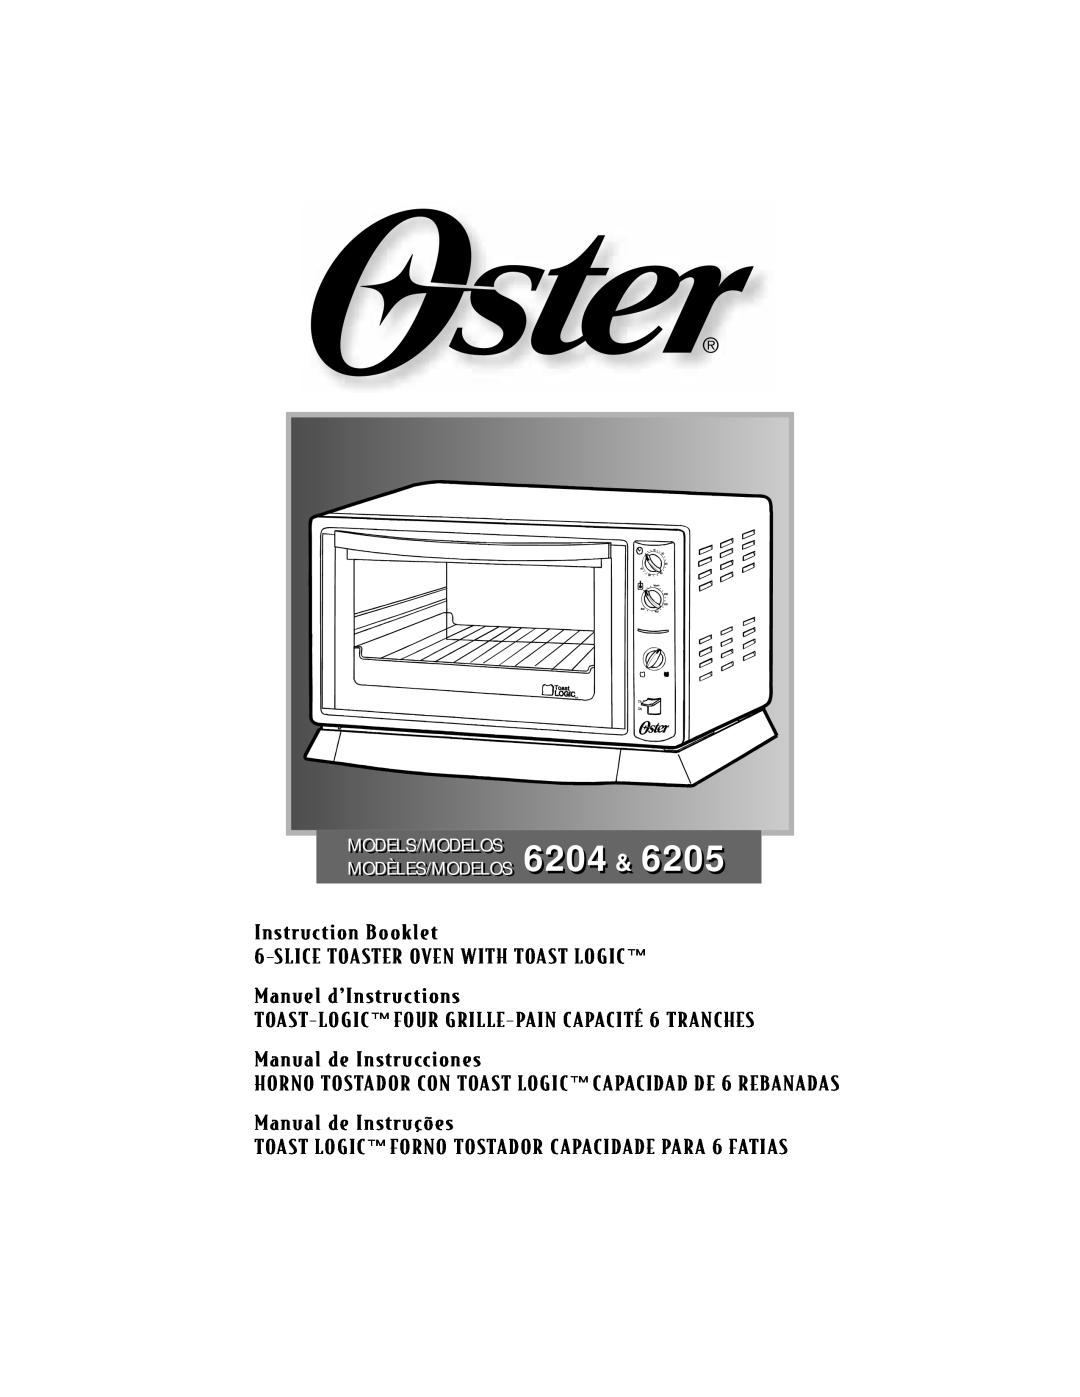 Oster 6204 manual Instruction Booklet, Slicetoaster Oven With Toast Logic, Manuel dÕInstructions, Manual de Instrucciones 